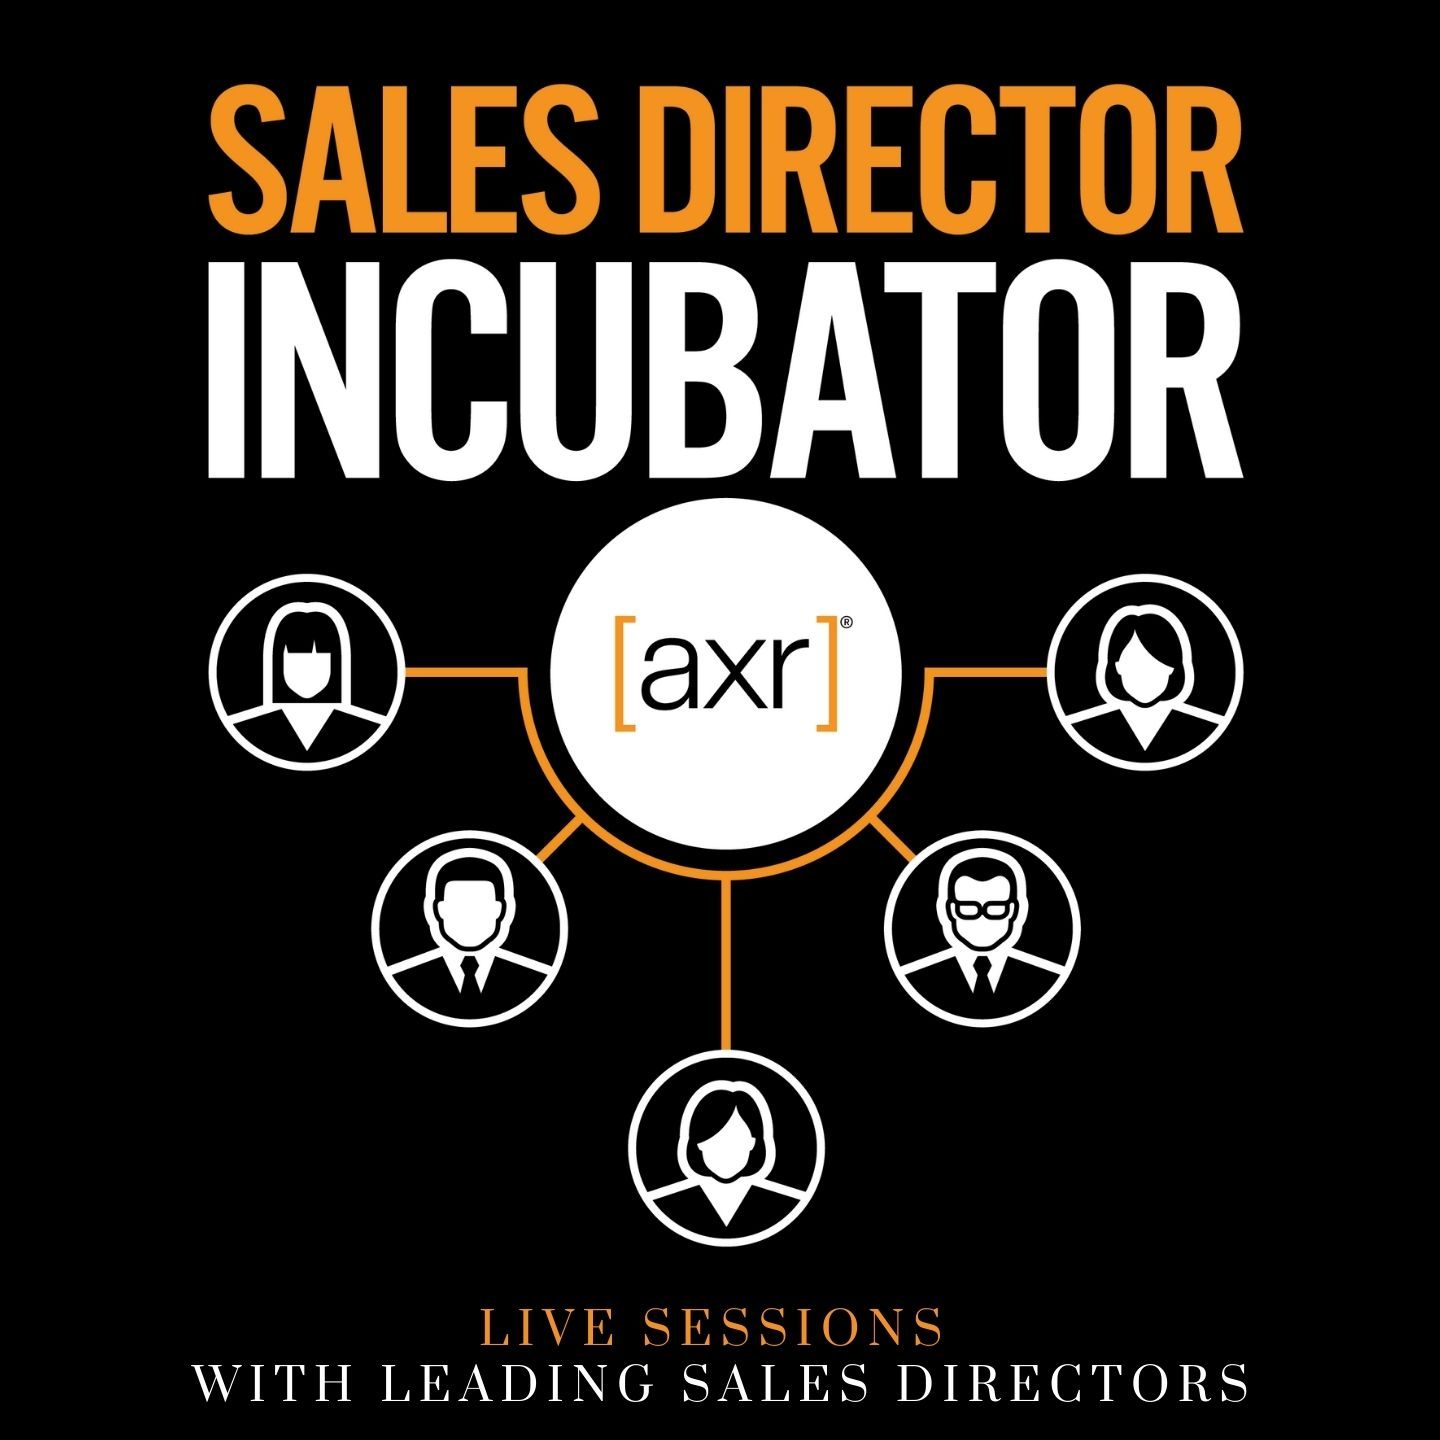 Sales Director Incubator live webinars sessions